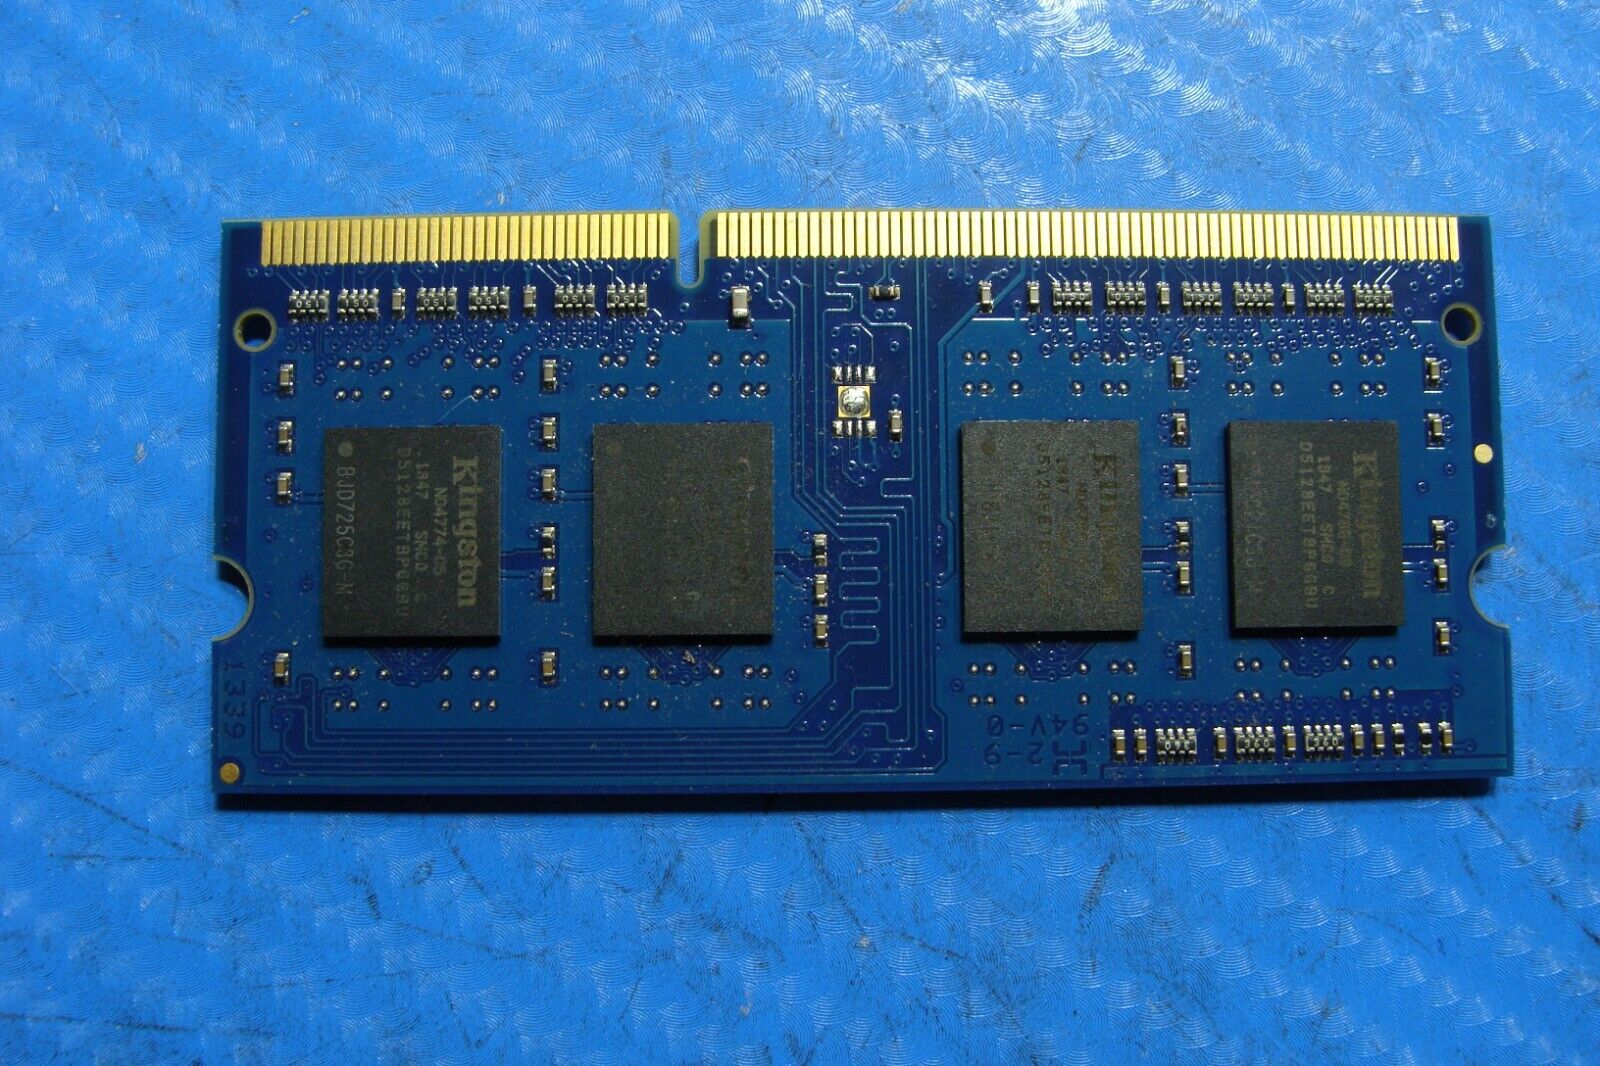 Dell 15 3521 Kingston 4Gb pc3l-12800s Memory Ram SODIMM KNWMX1-ETB